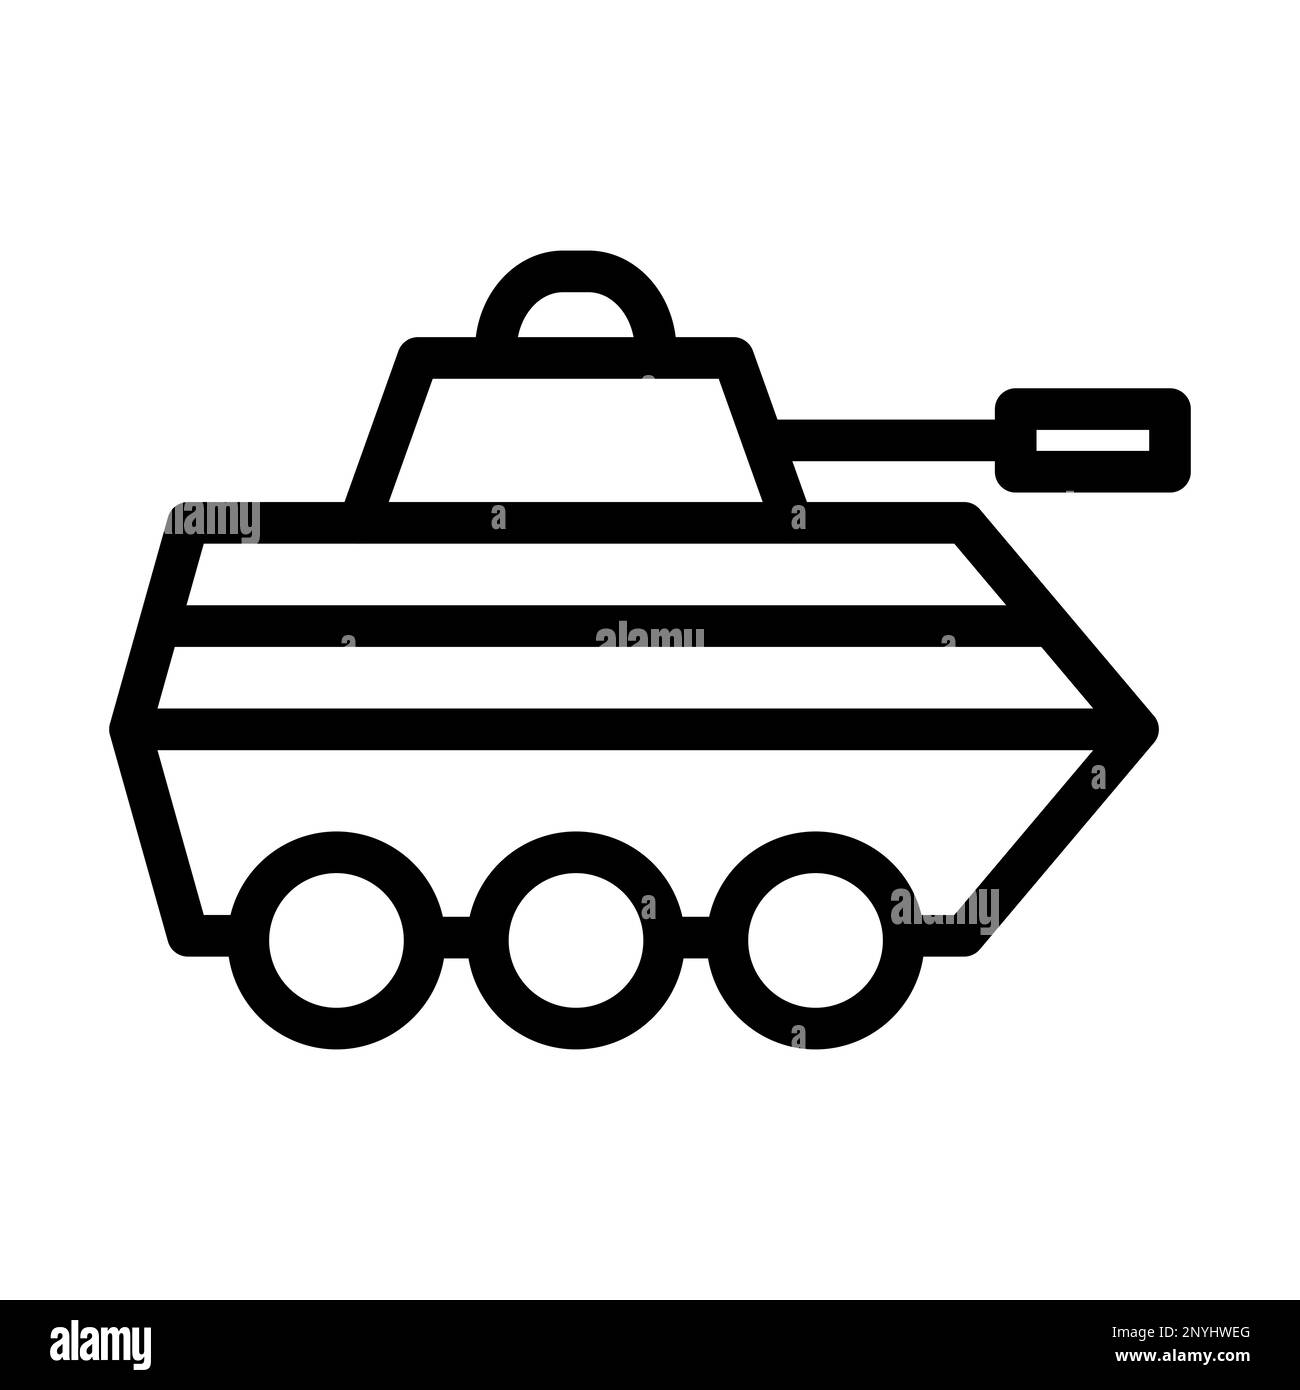 Tank Thick Line Icon Stock Photo